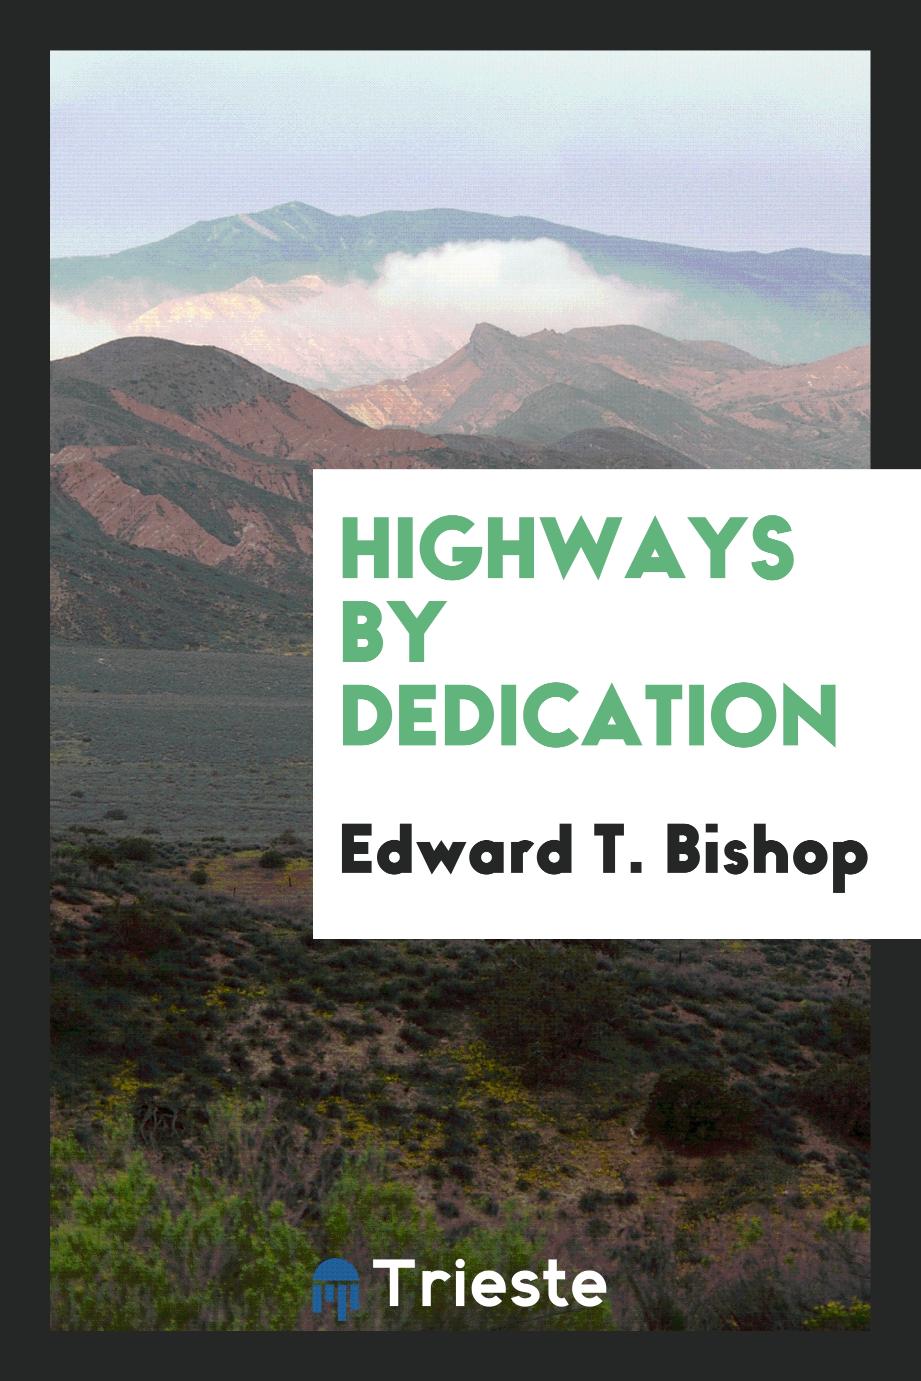 Highways by dedication